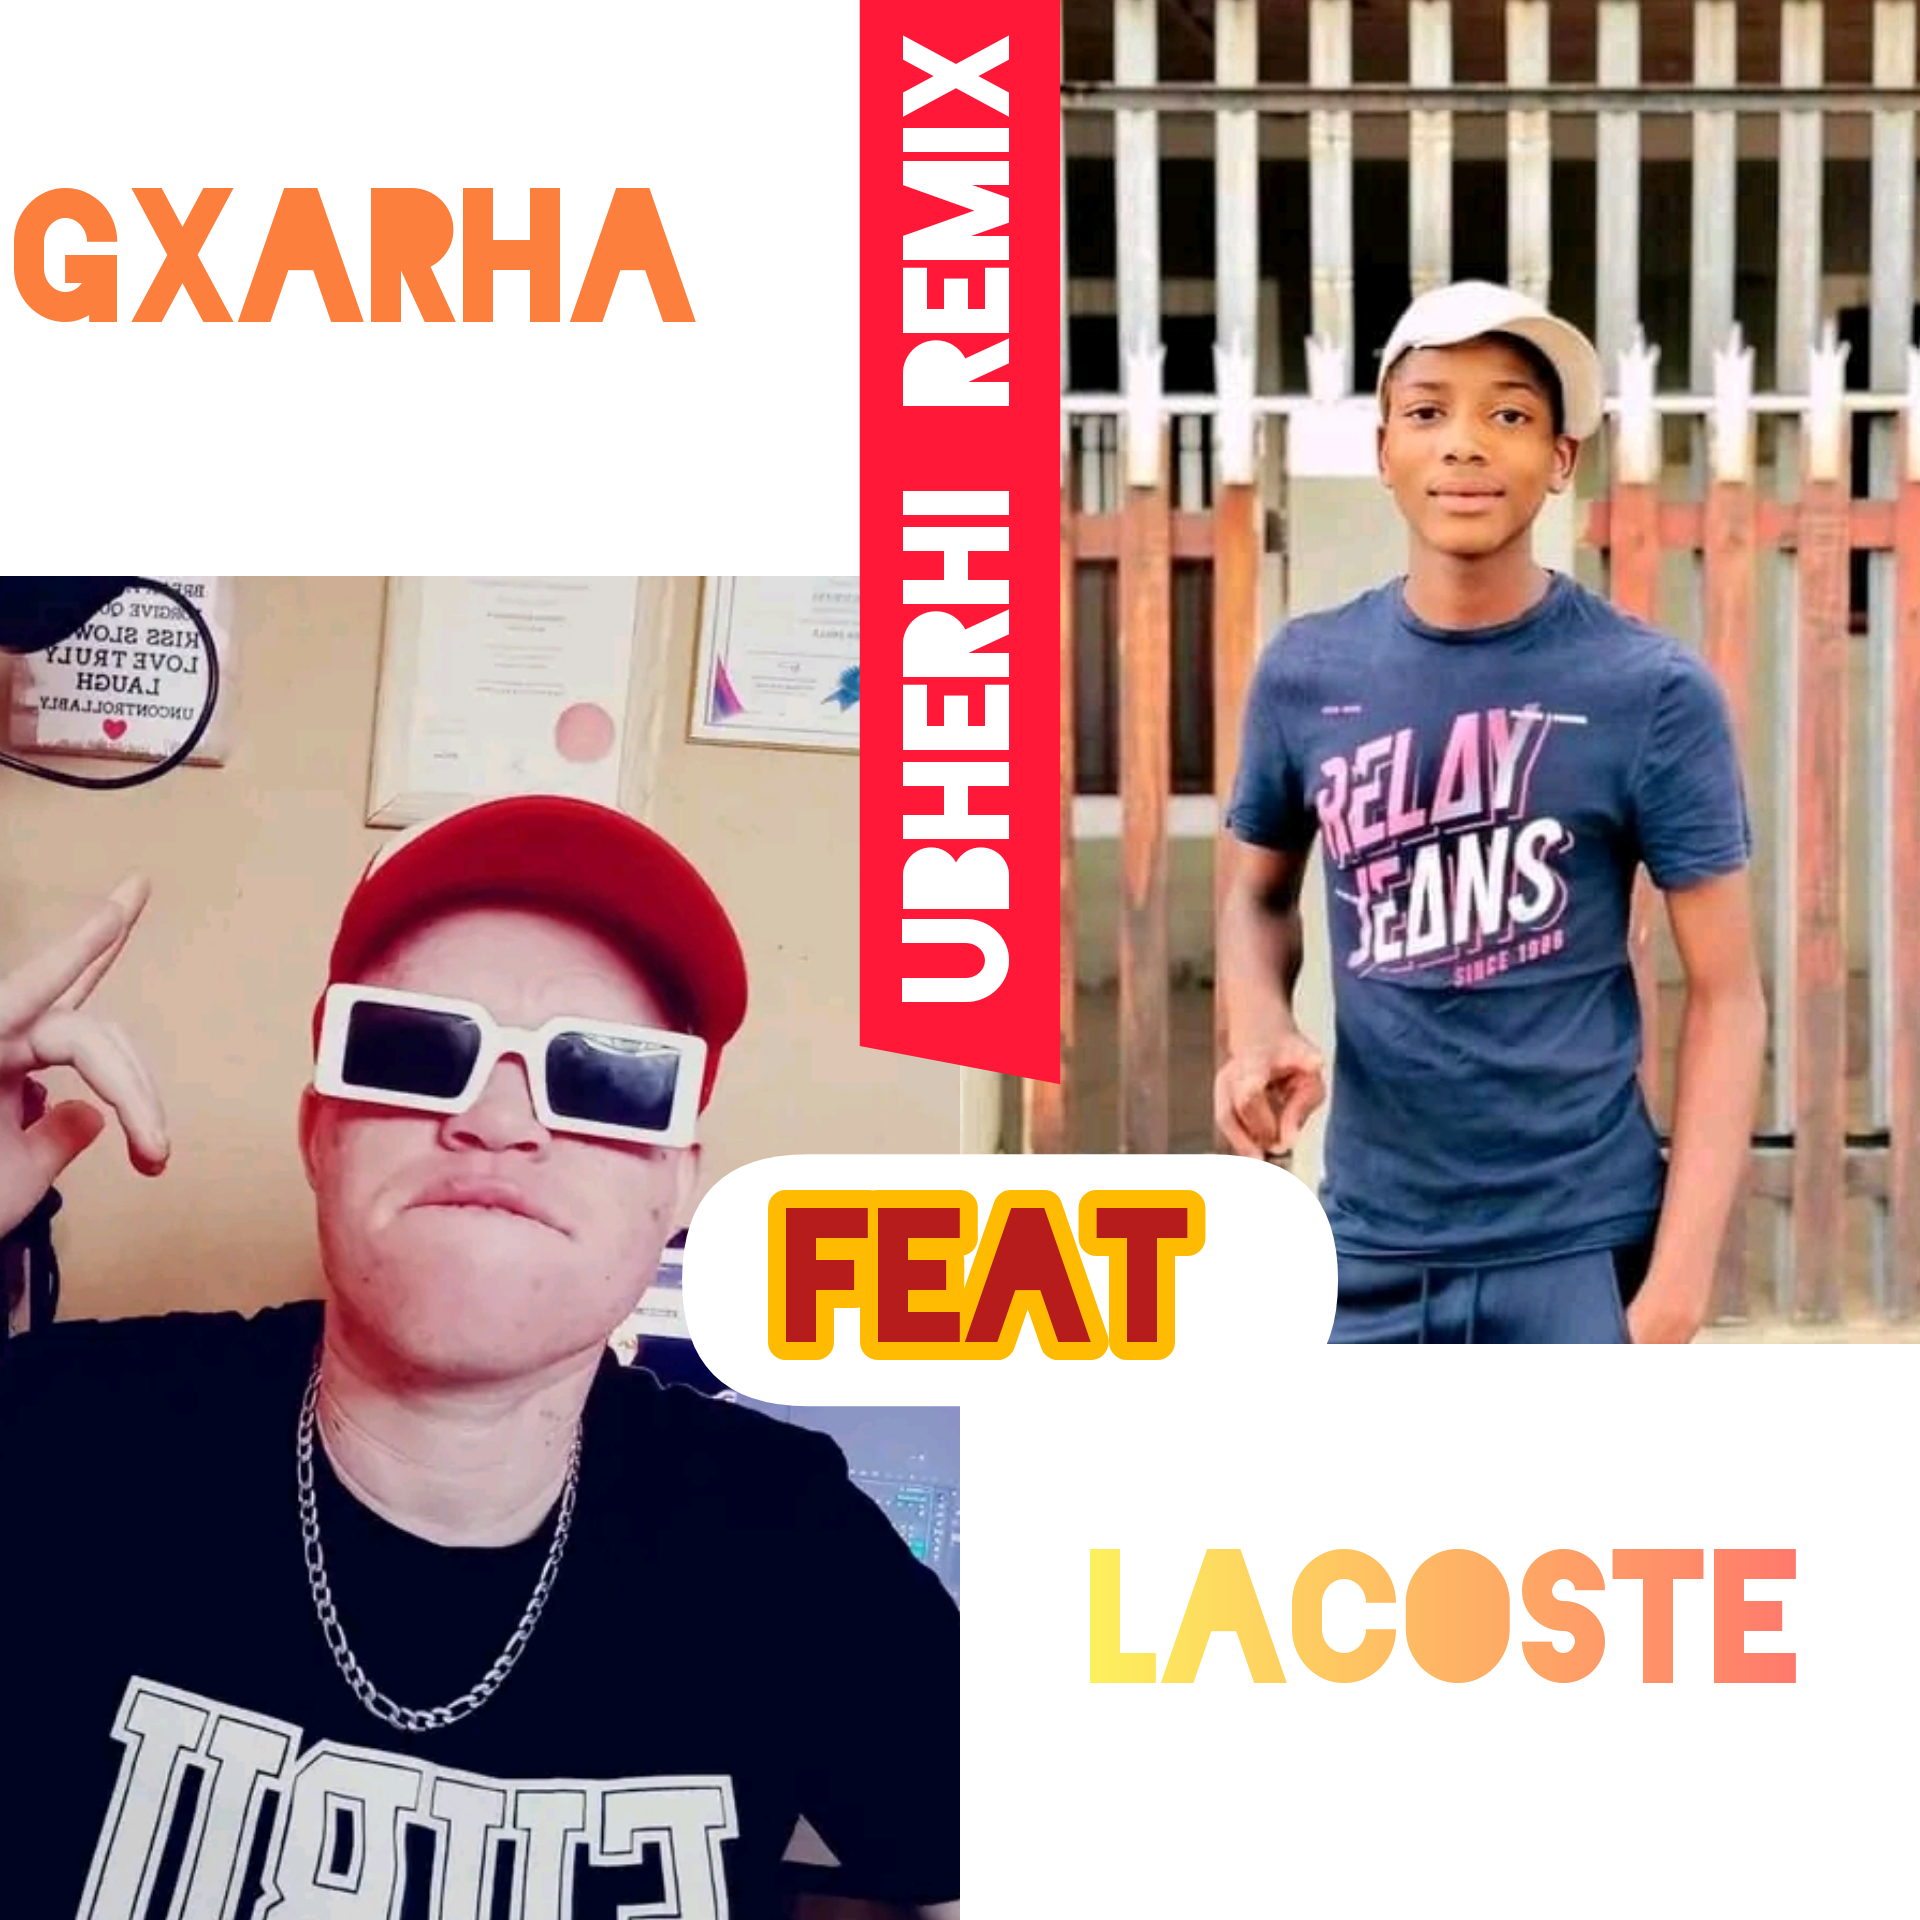 uBherhi Remix - Gxarha feat Lacoste